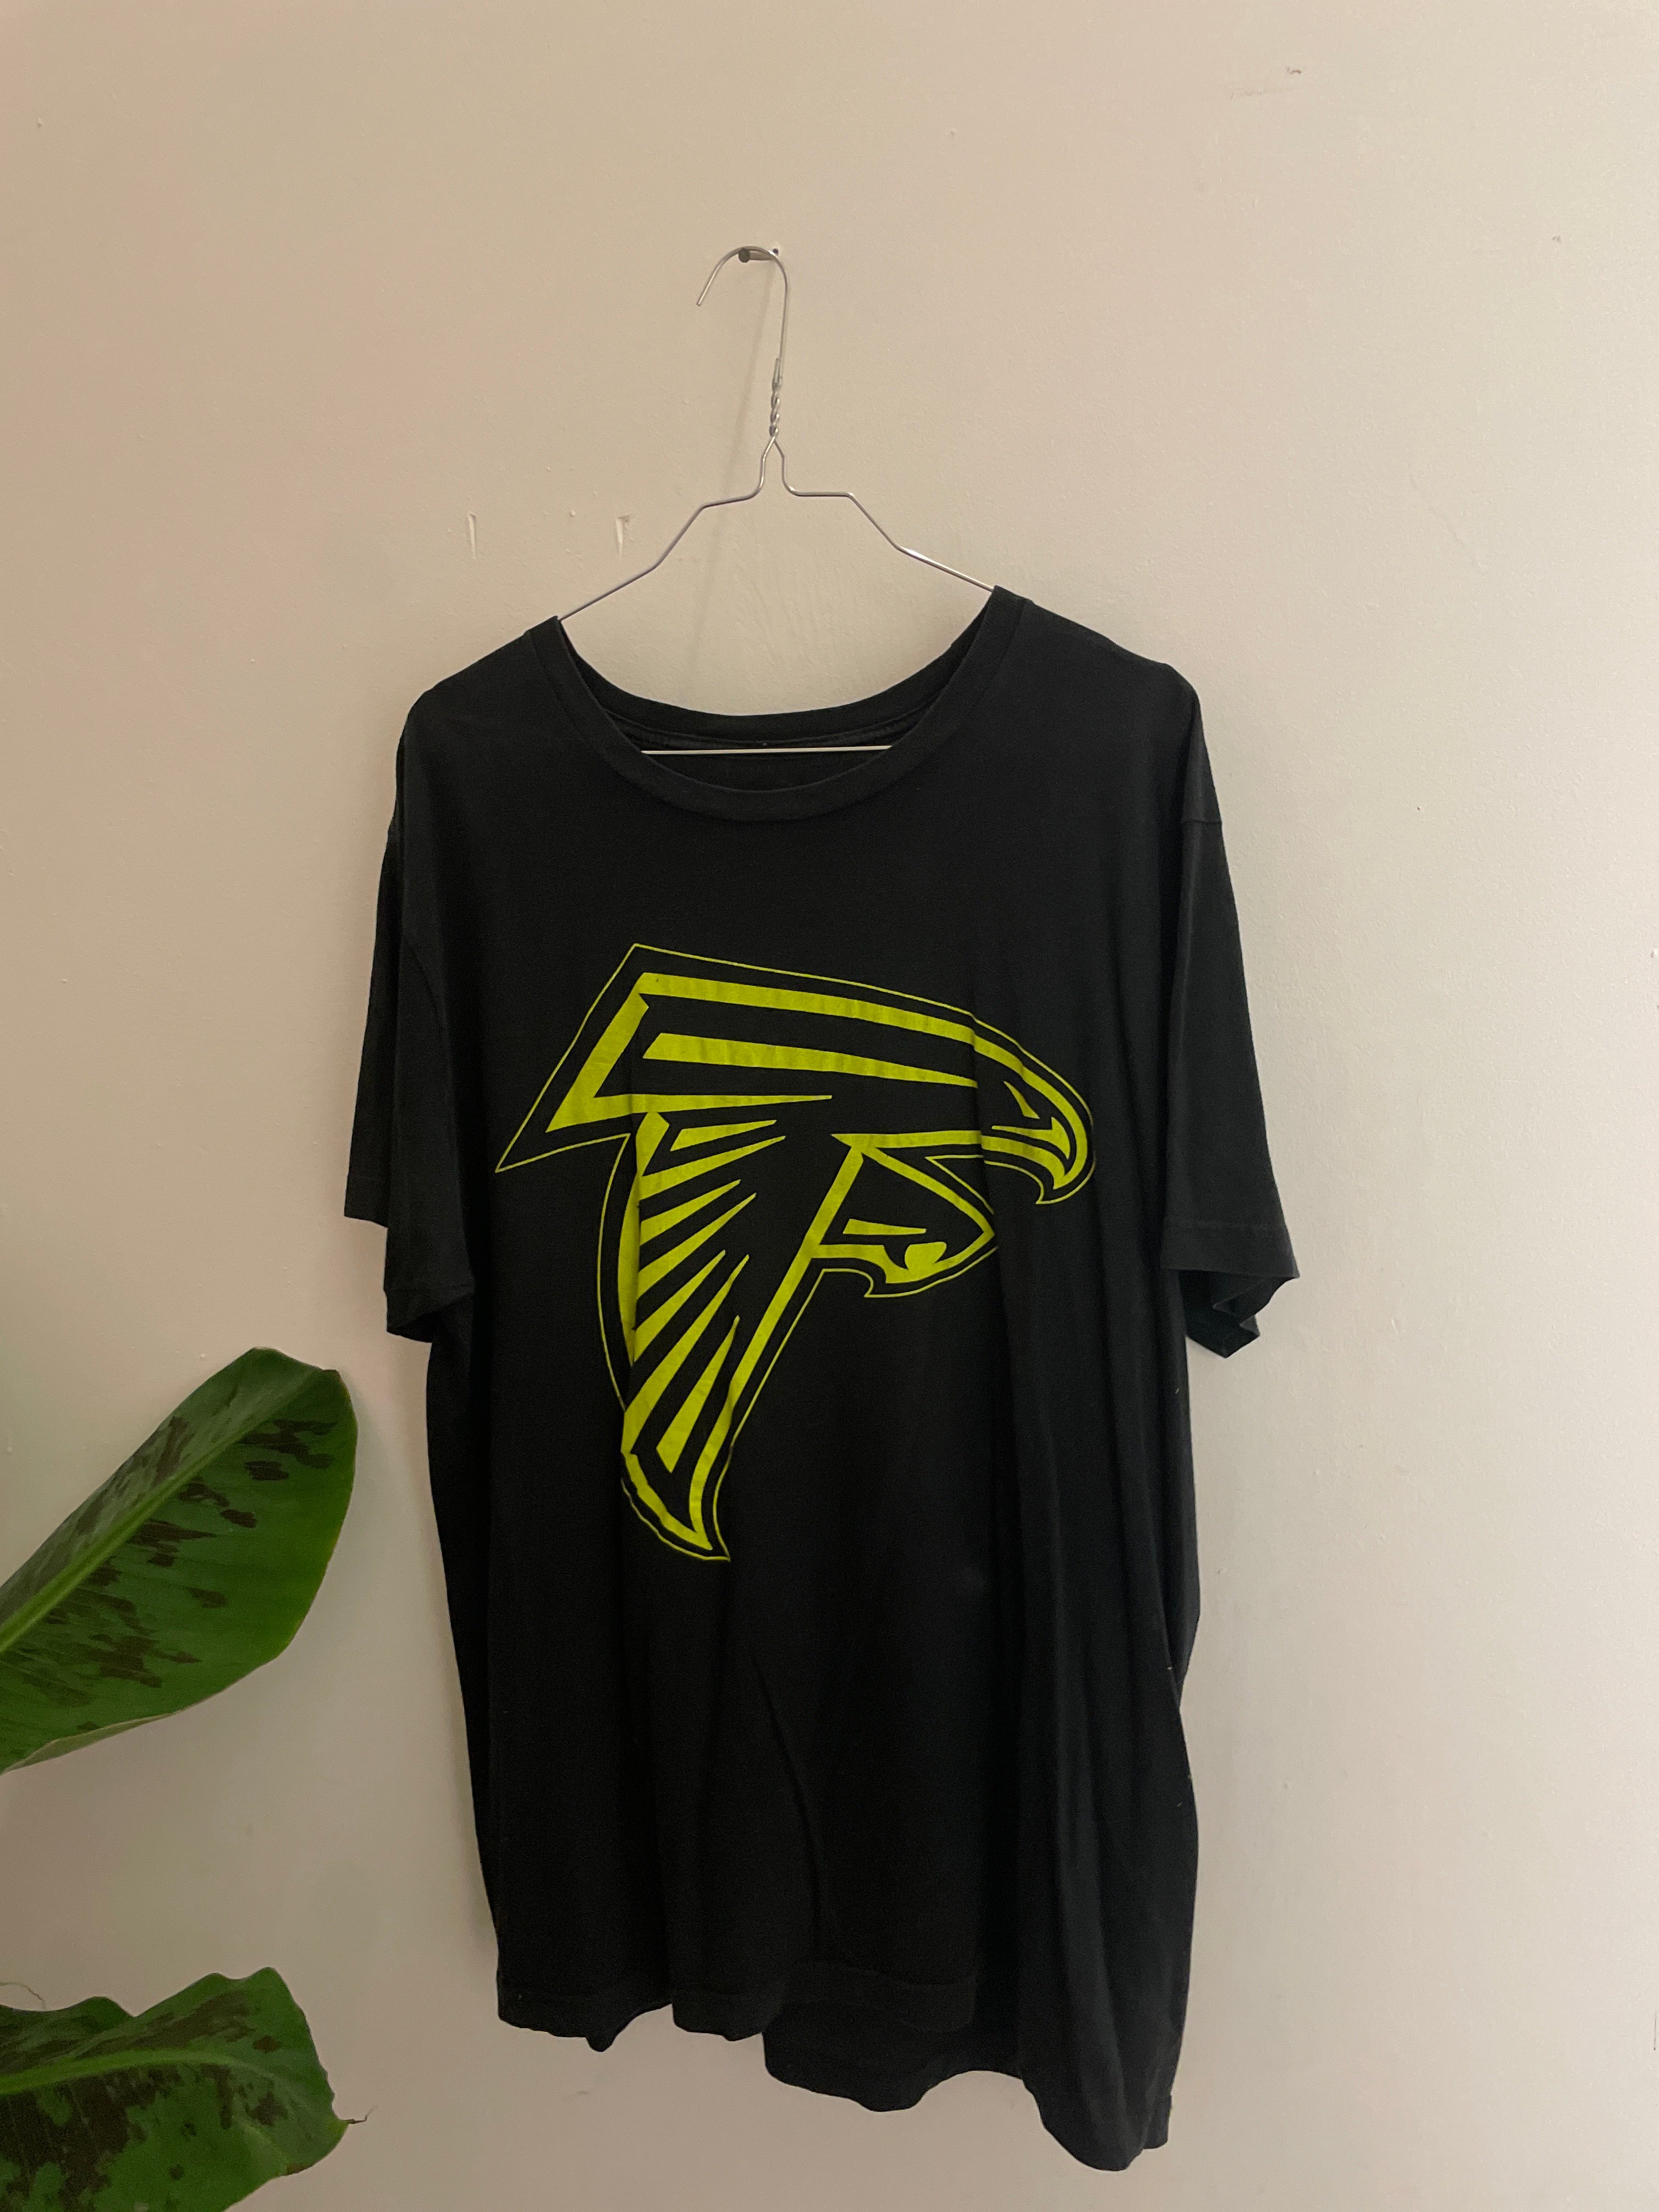 Vintage NFL Atlanta falcon black tshirt size L